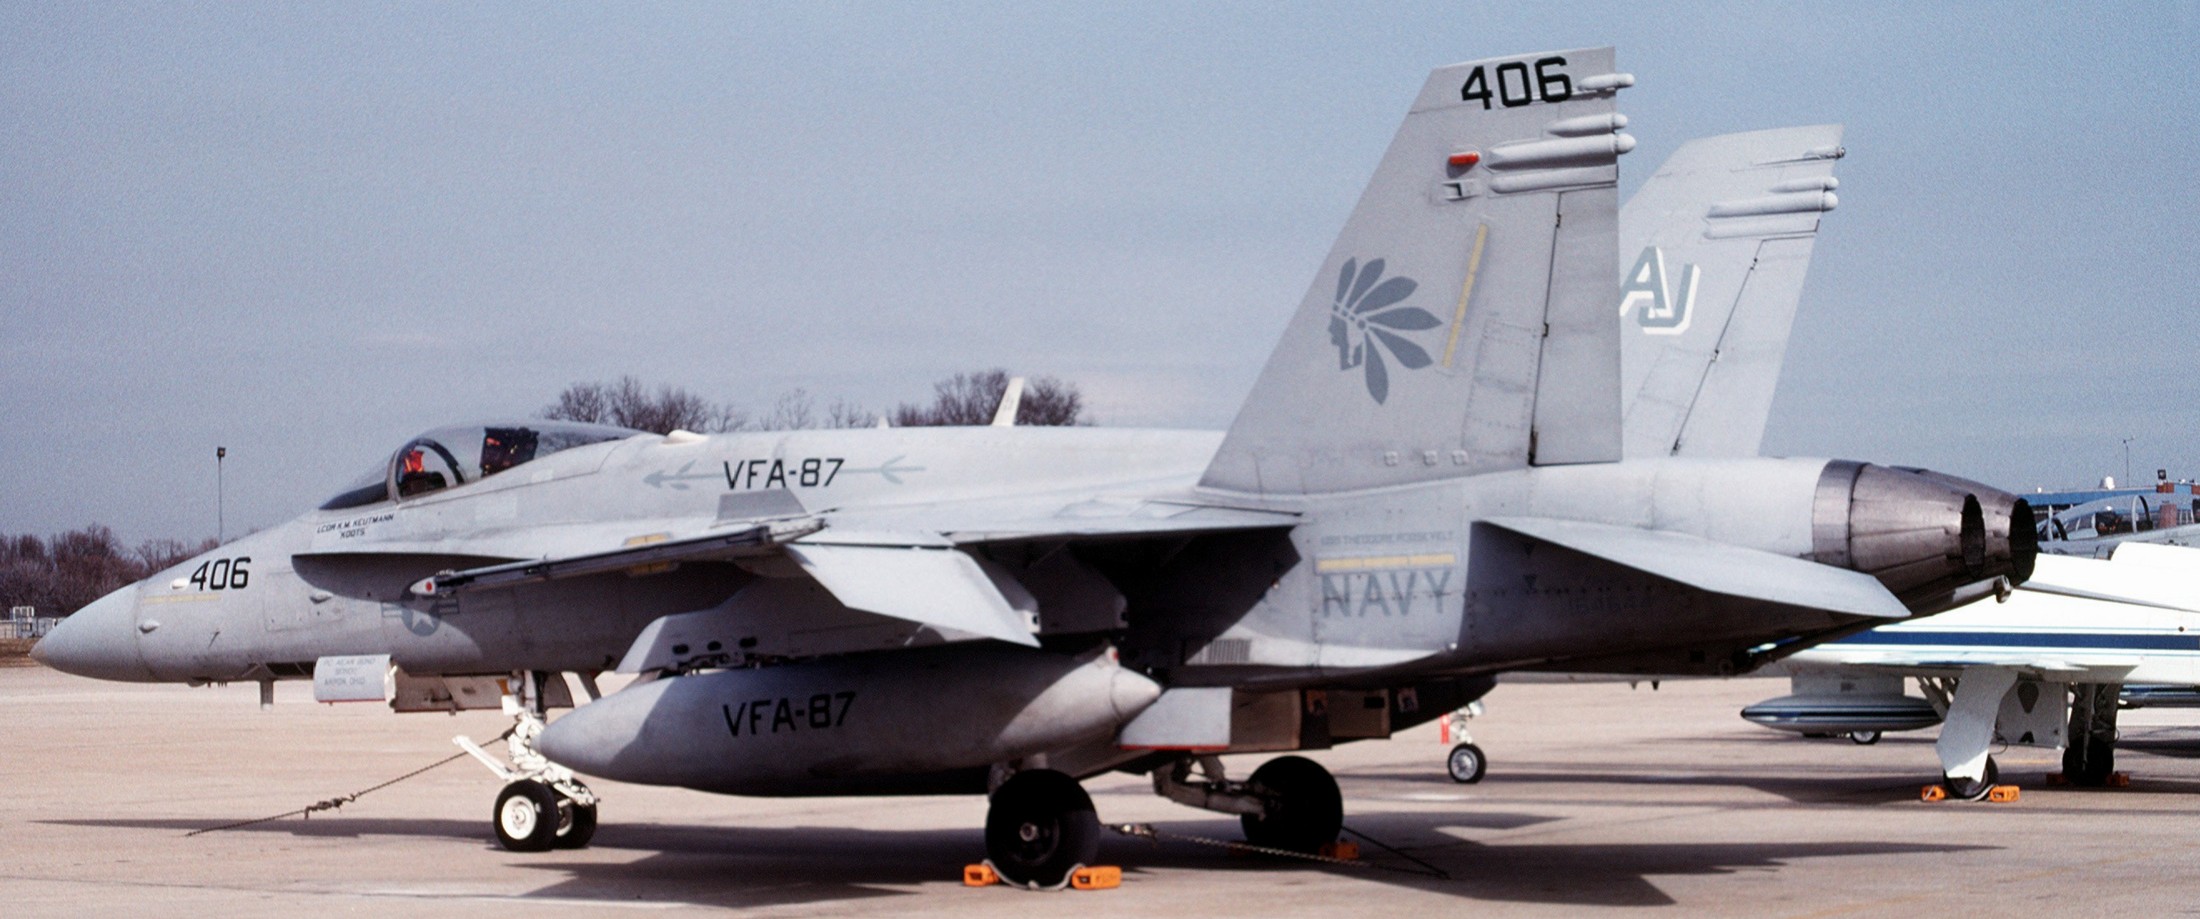 vfa-87 golden warriors strike fighter squadron f/a-18c hornet us navy 04